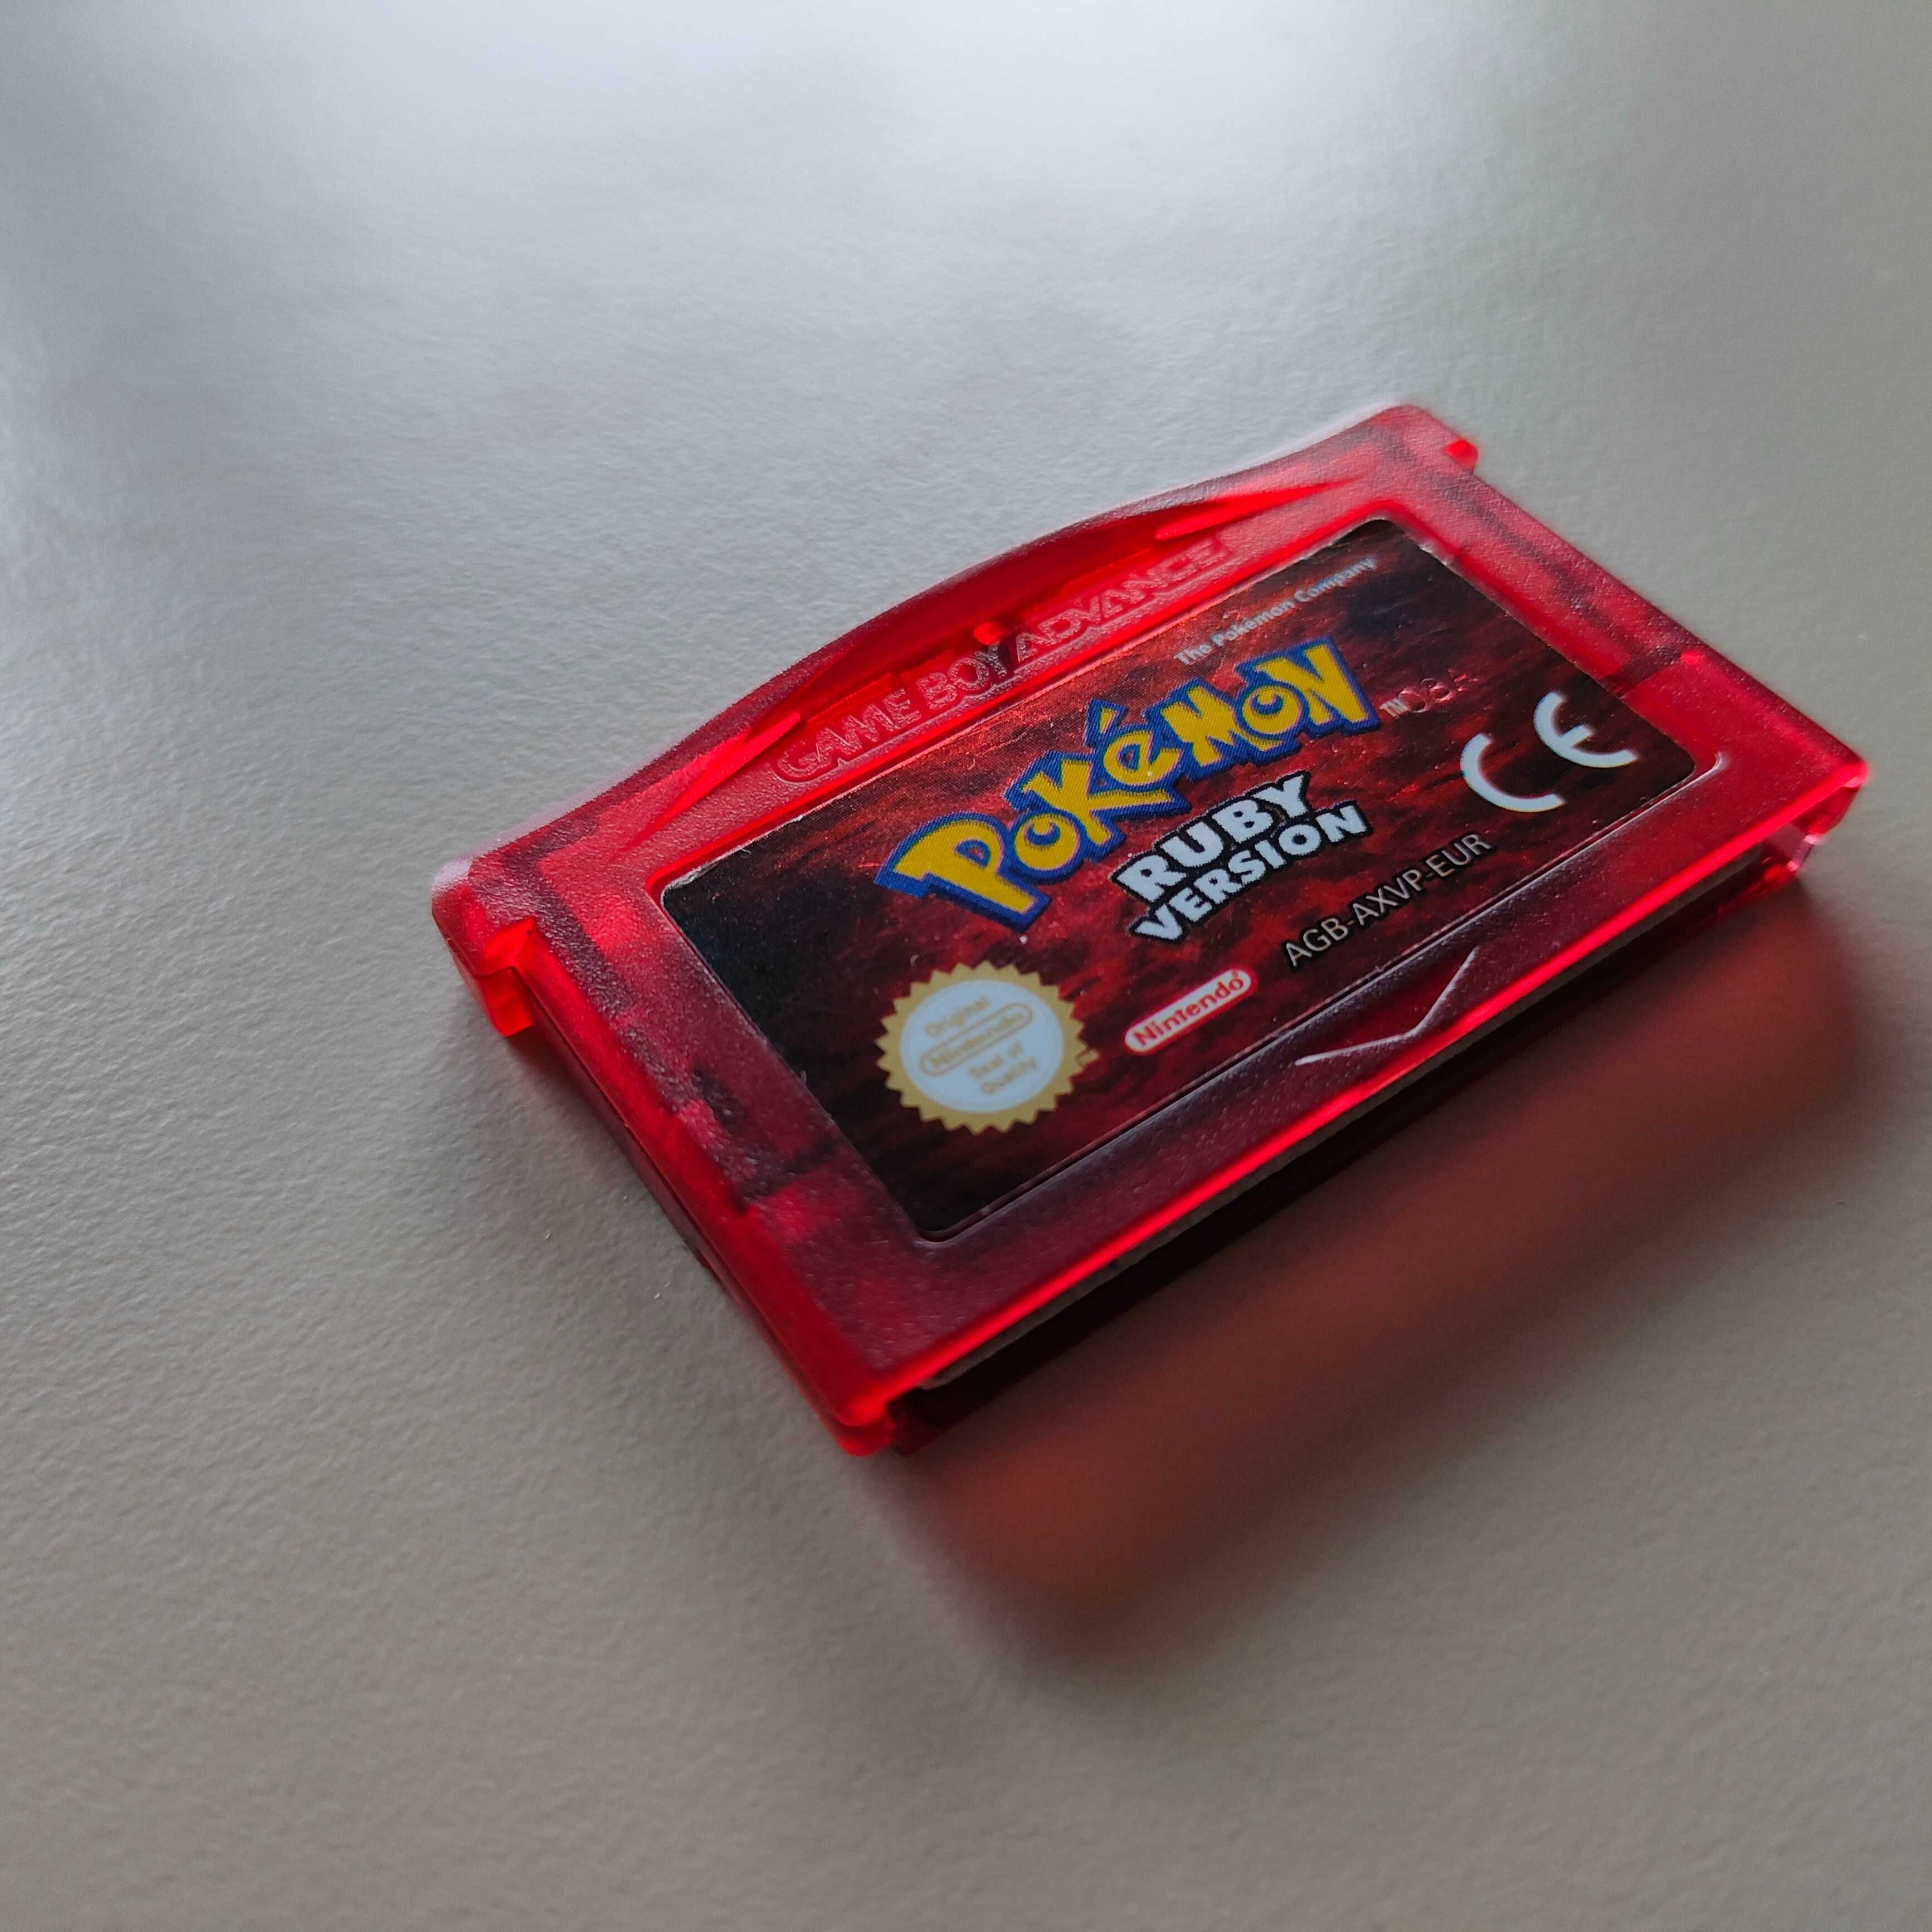 Pokemon Ruby Gameboy Advance oryginał